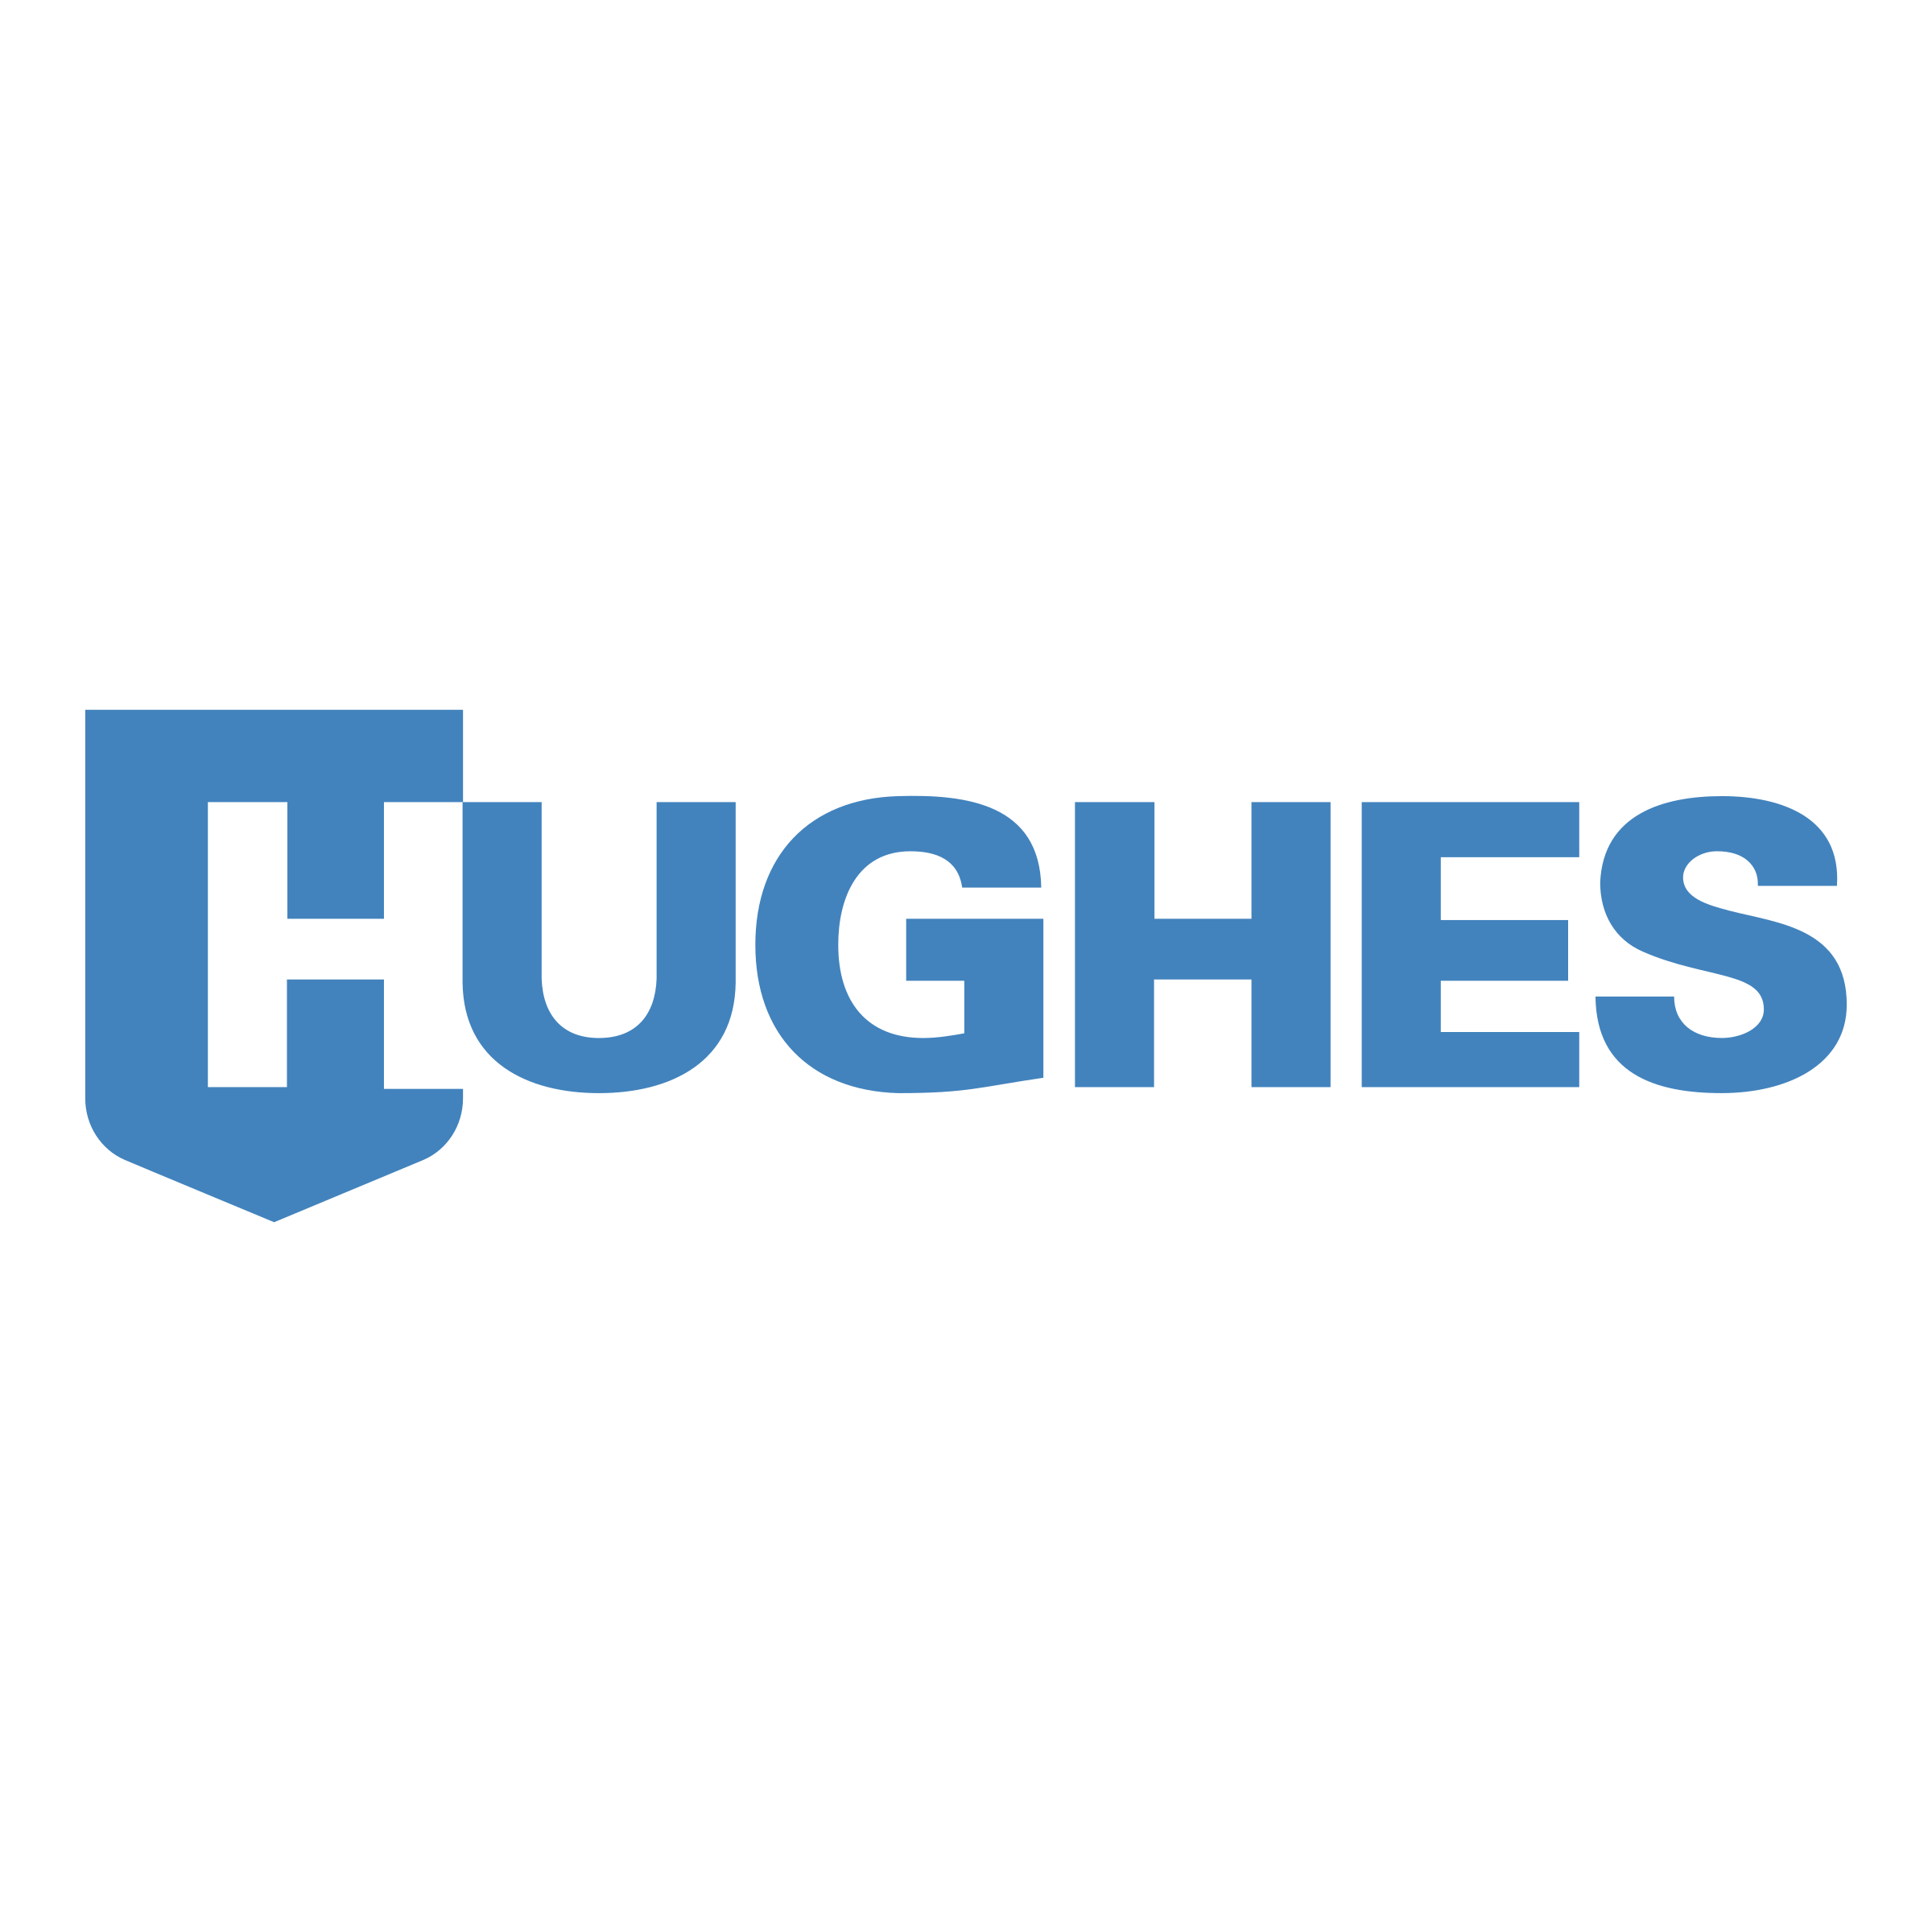 Hughes Logo - Hughes Supply Logo PNG Transparent & SVG Vector